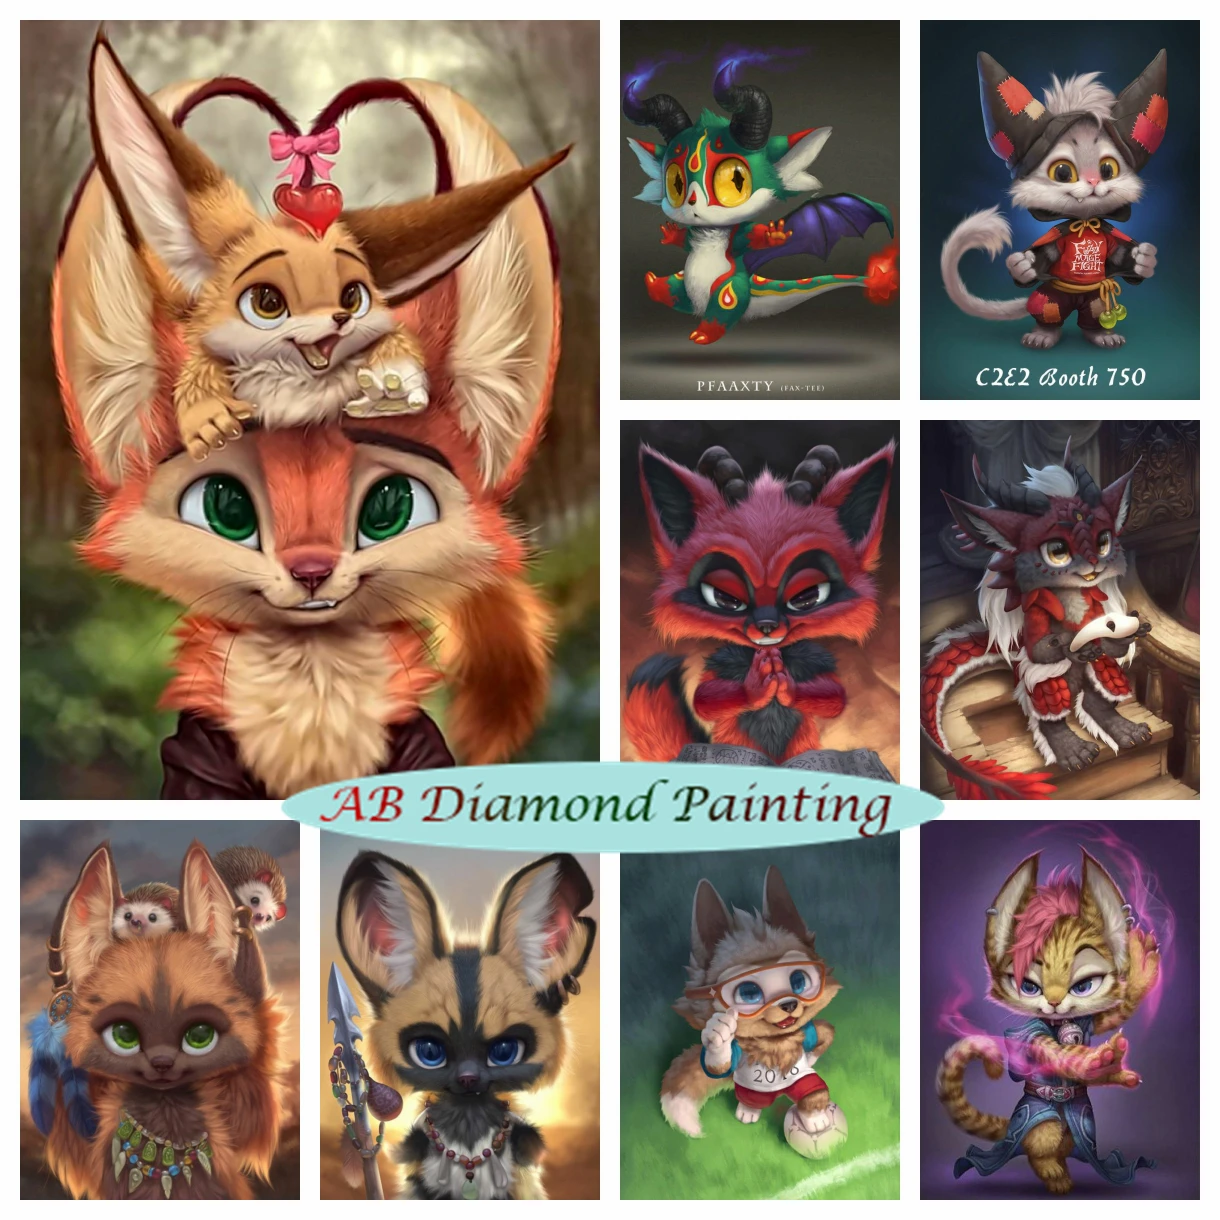 

Fox 5D AB Diamond Painting Fantasy Animal Art Cross Stitch Kits Cute Silverfox Mosaic Embroidery Home Decor Kids Gift Craft